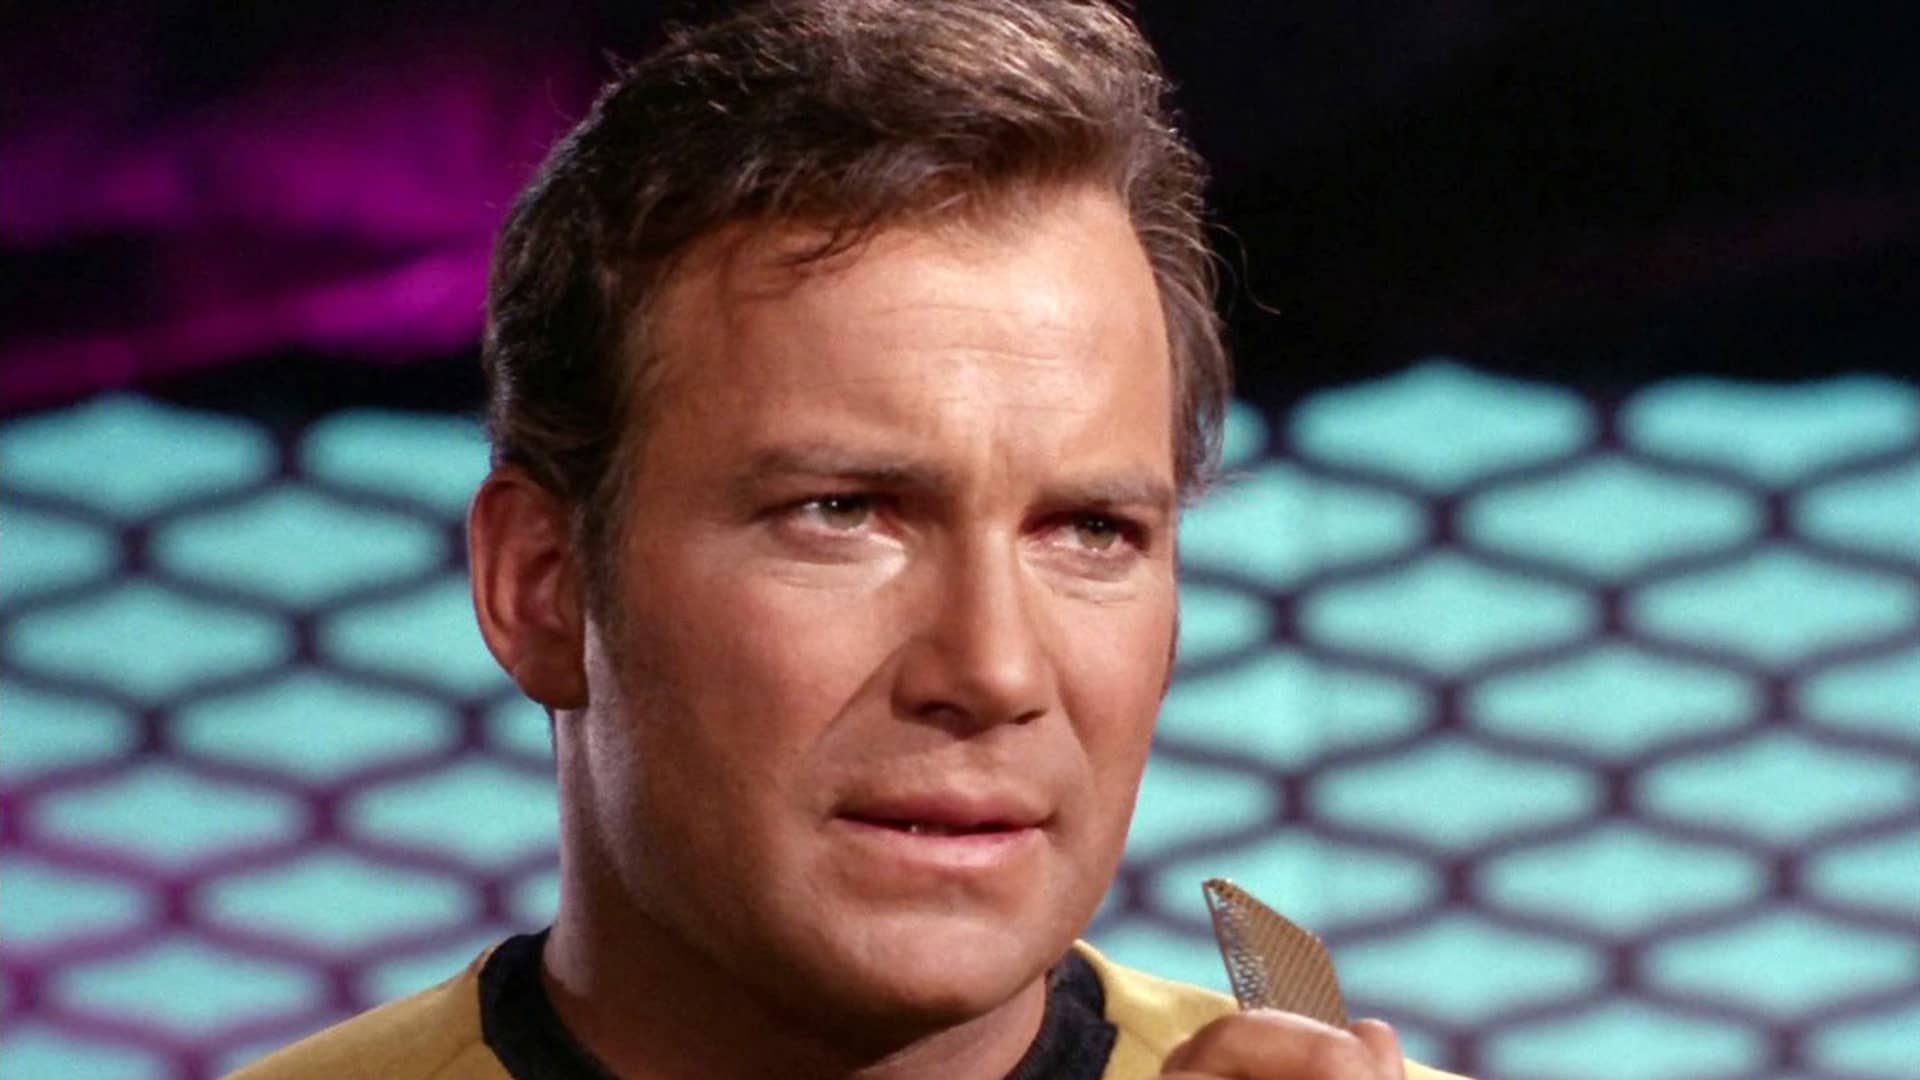 William Shatner as Captain James T. Kirk